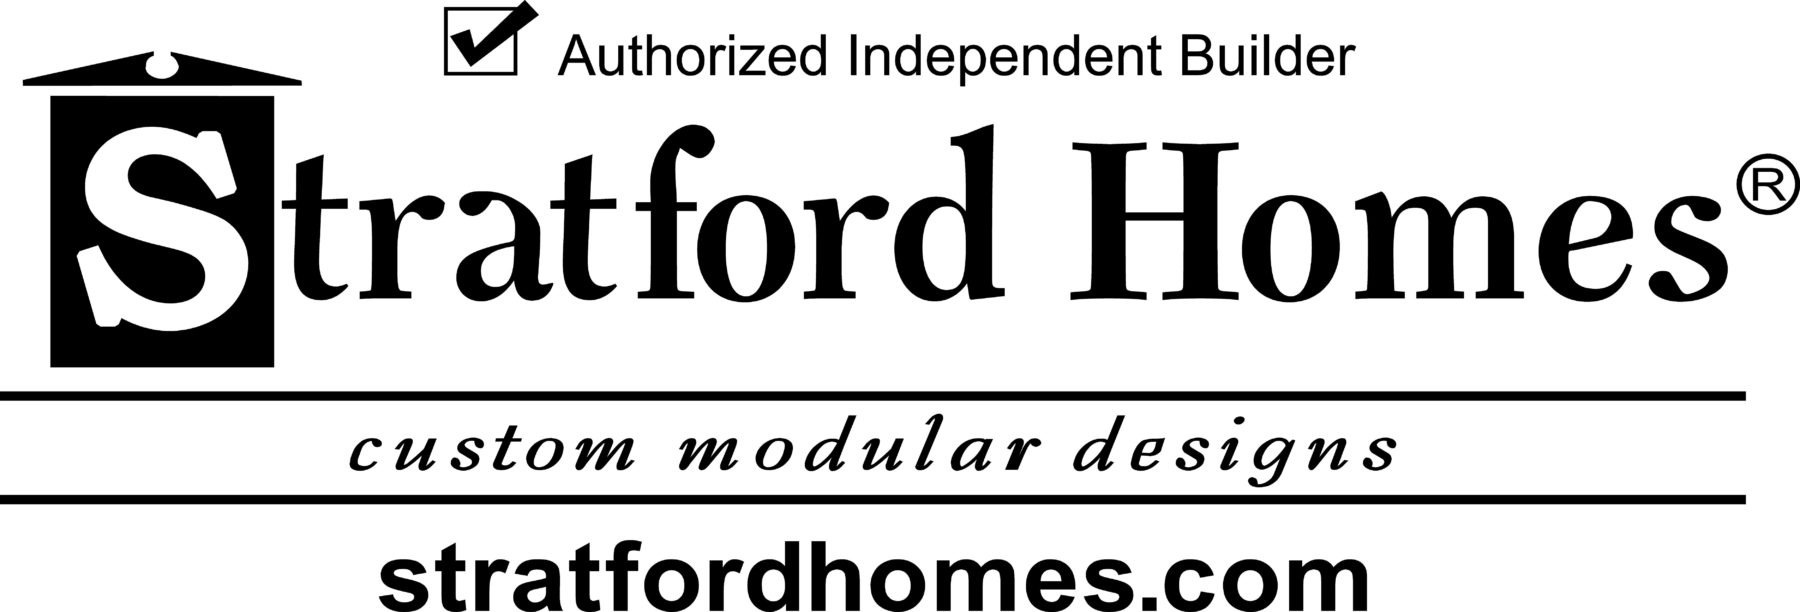 Stratford Homes